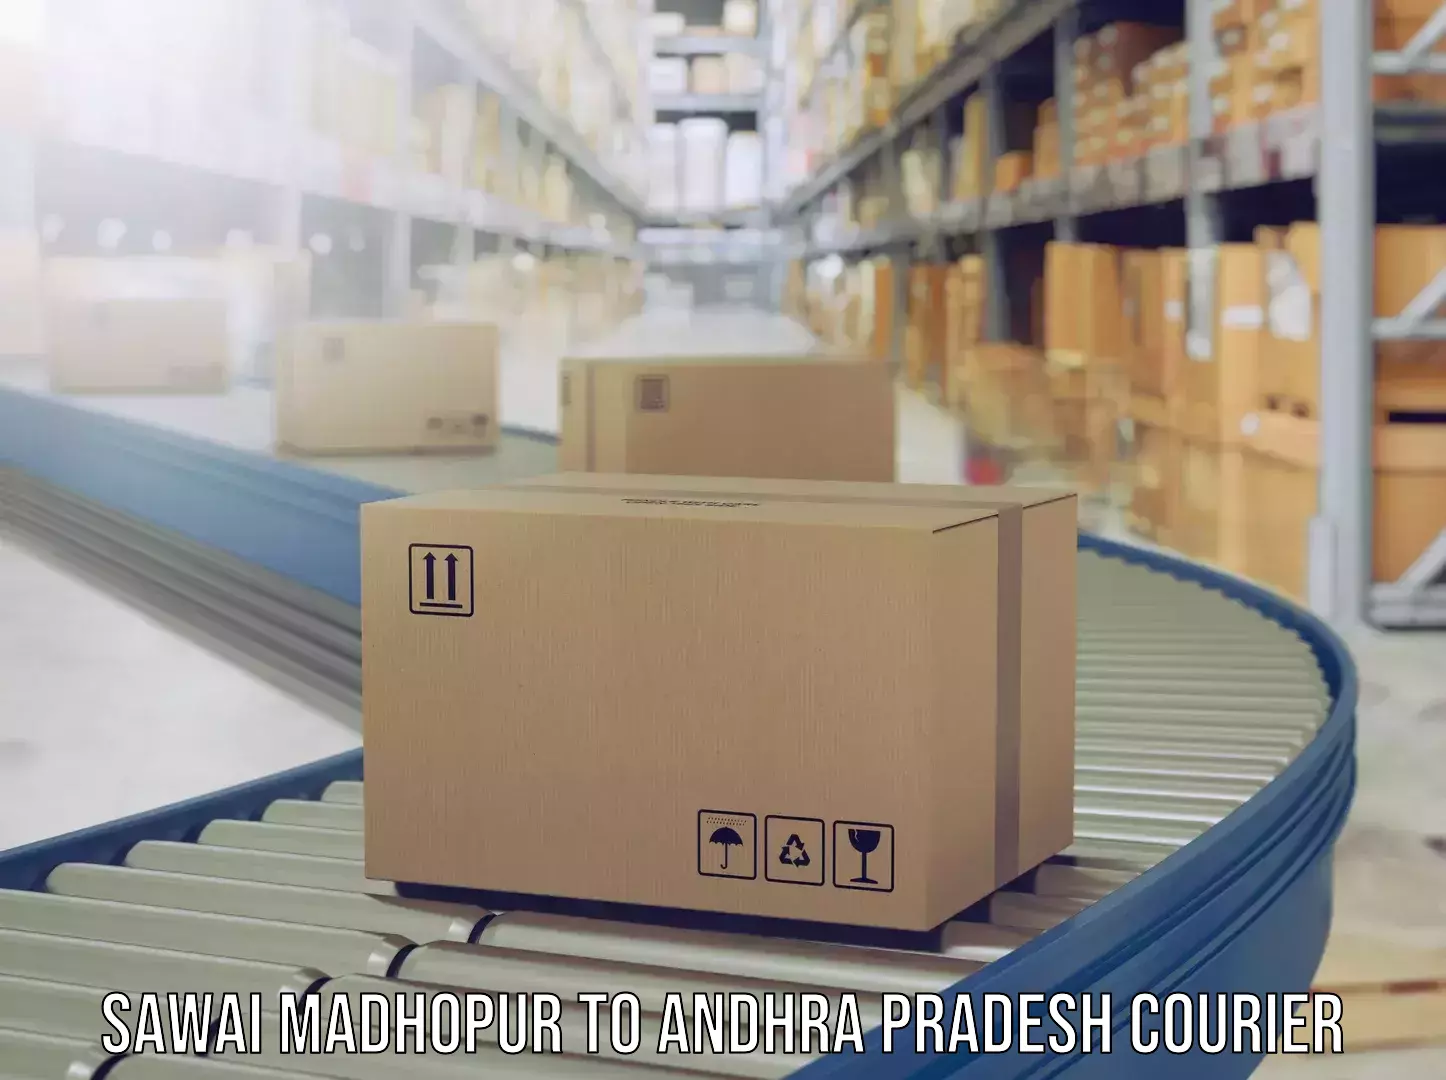 Luggage delivery app Sawai Madhopur to Inkollu